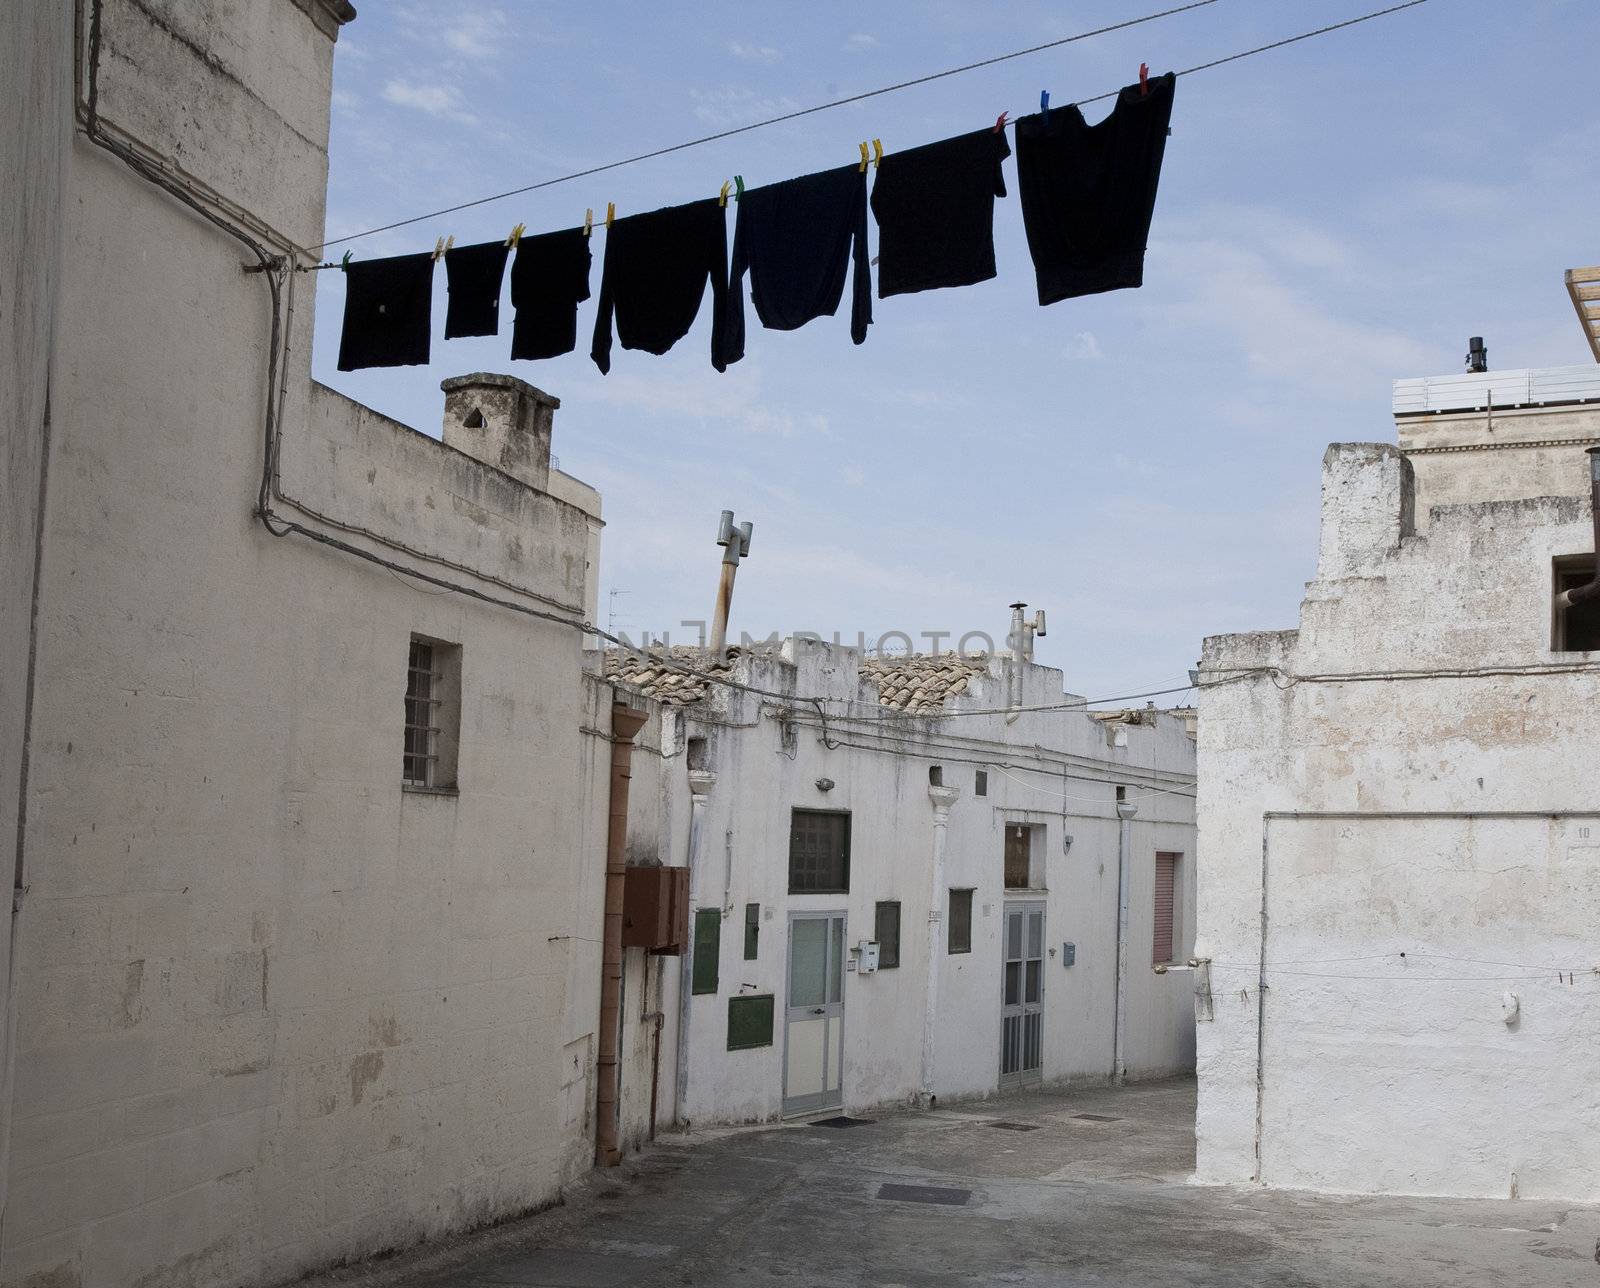 Washing day for the black clothes - Sassi, Matera - region of Basilicata, Italy.